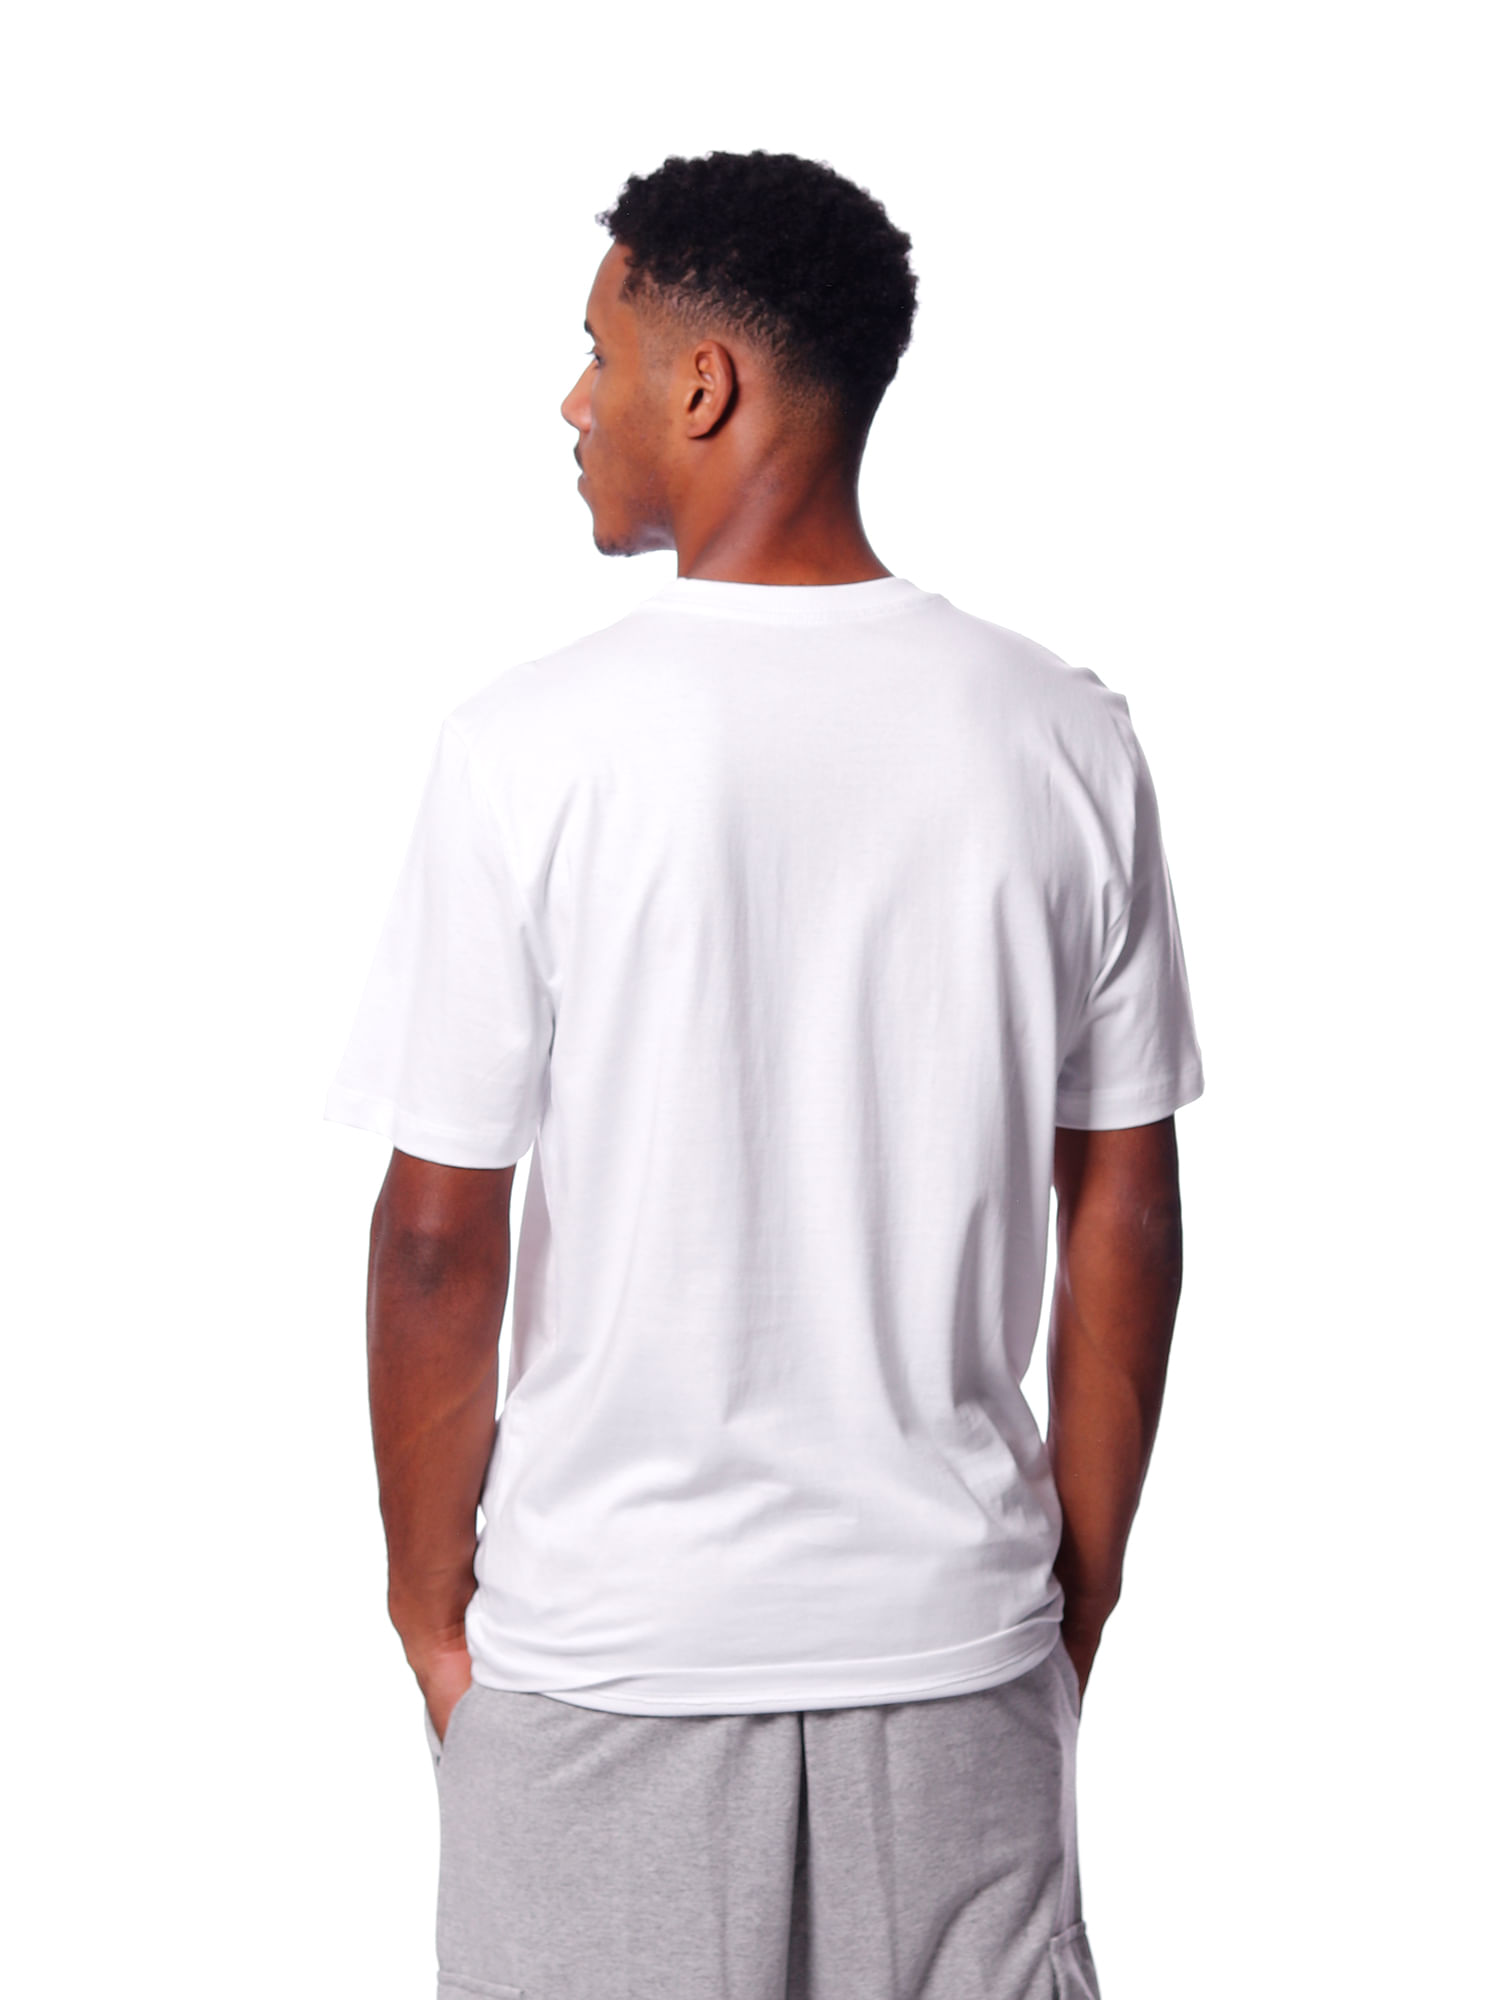 Camiseta-new-era-big-logo-mlb-new-york-yankees-Branco